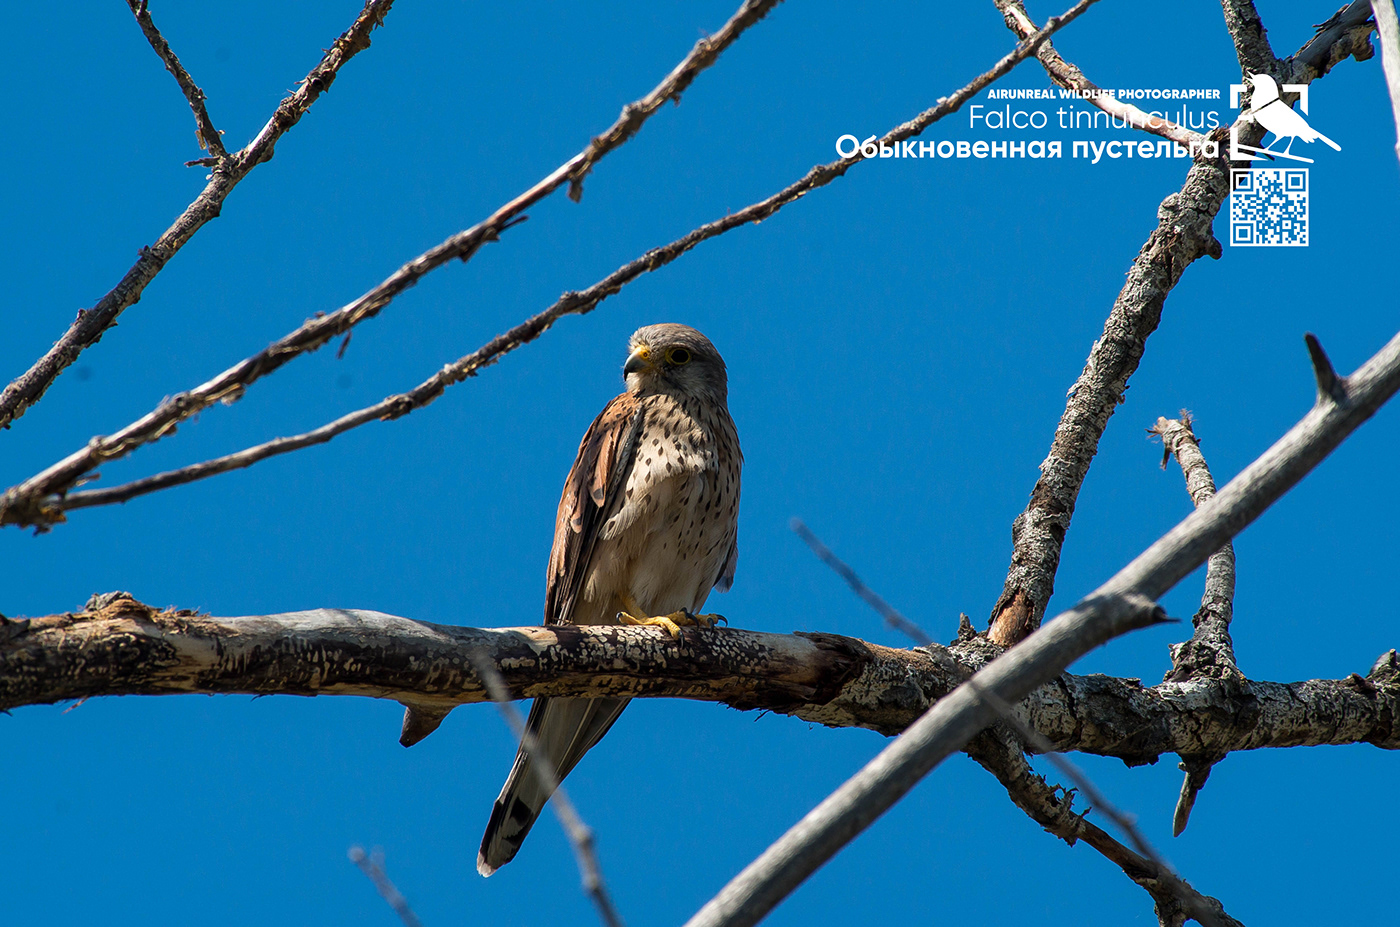 falco tinnunculus bird birds birdswatching volgograd Russia wildlife common kestrel kestrel